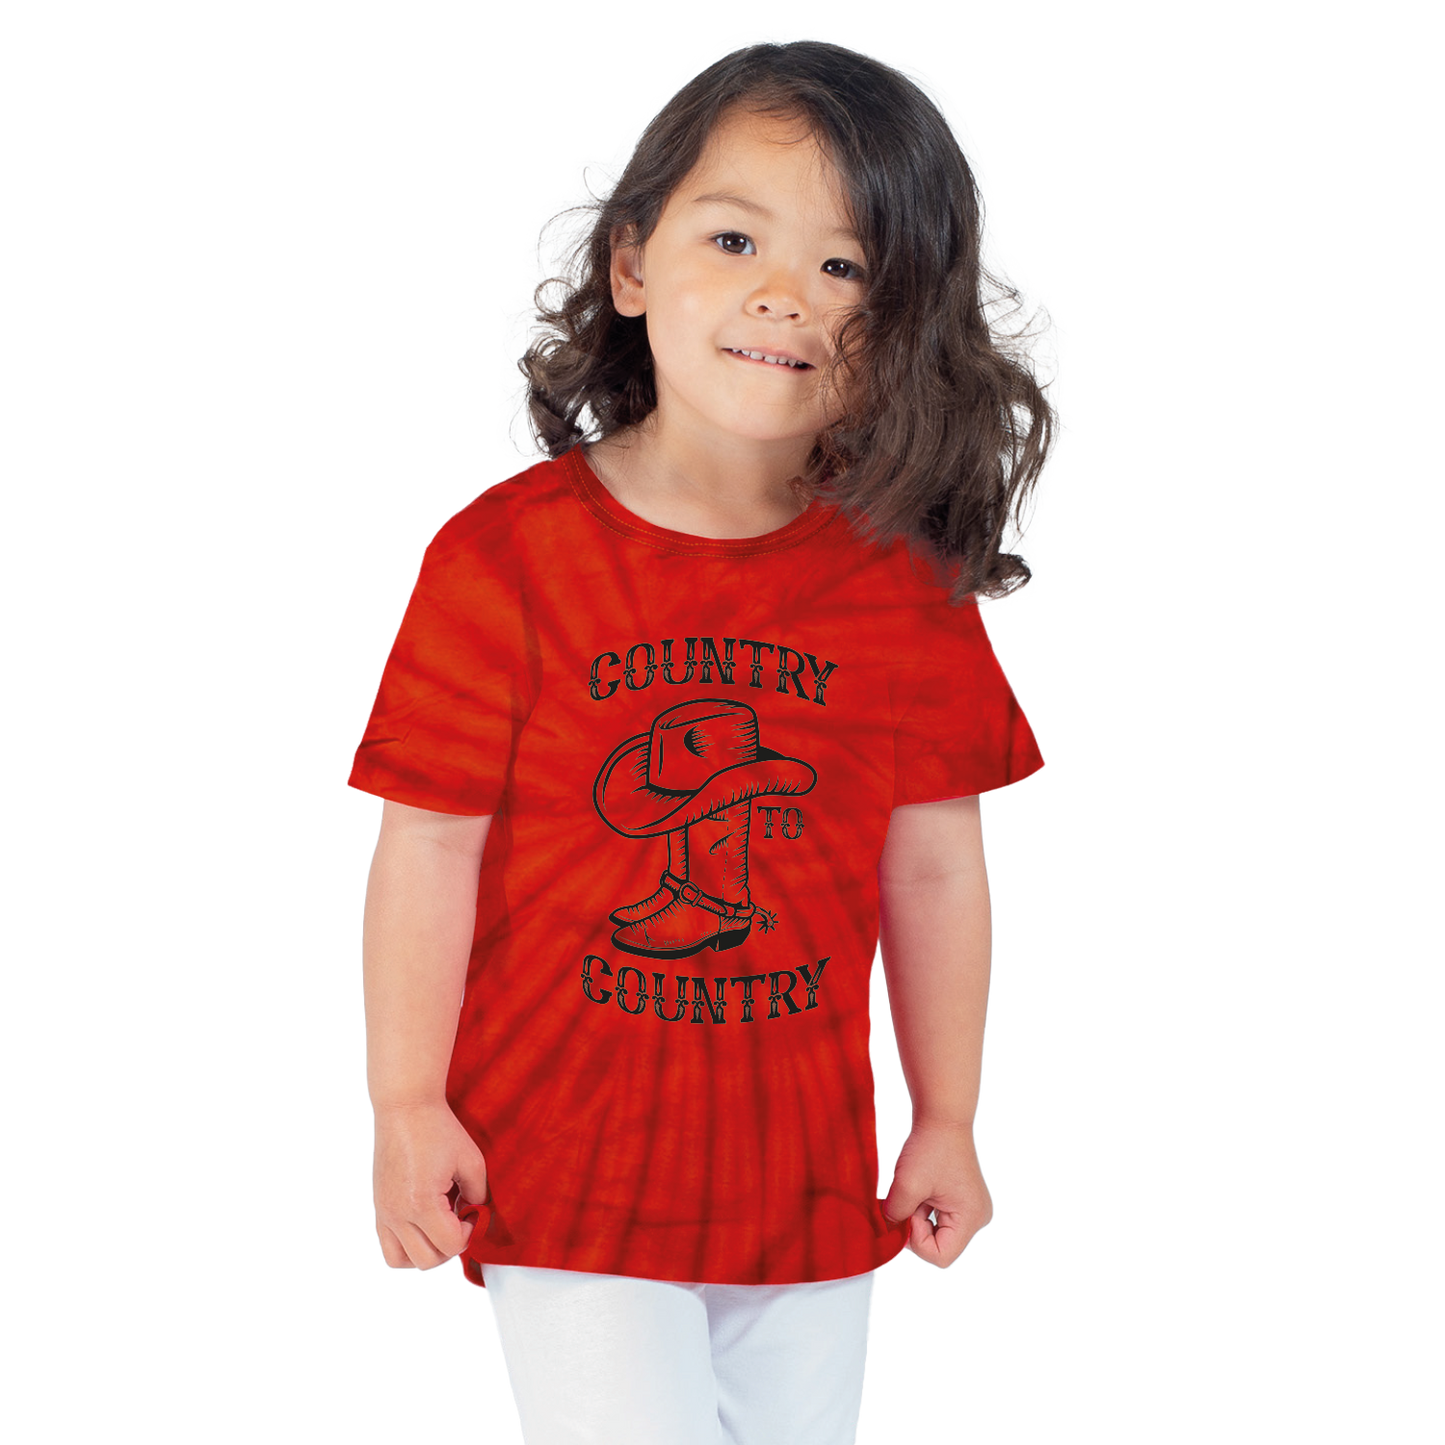 Toddler Red T-Shirt